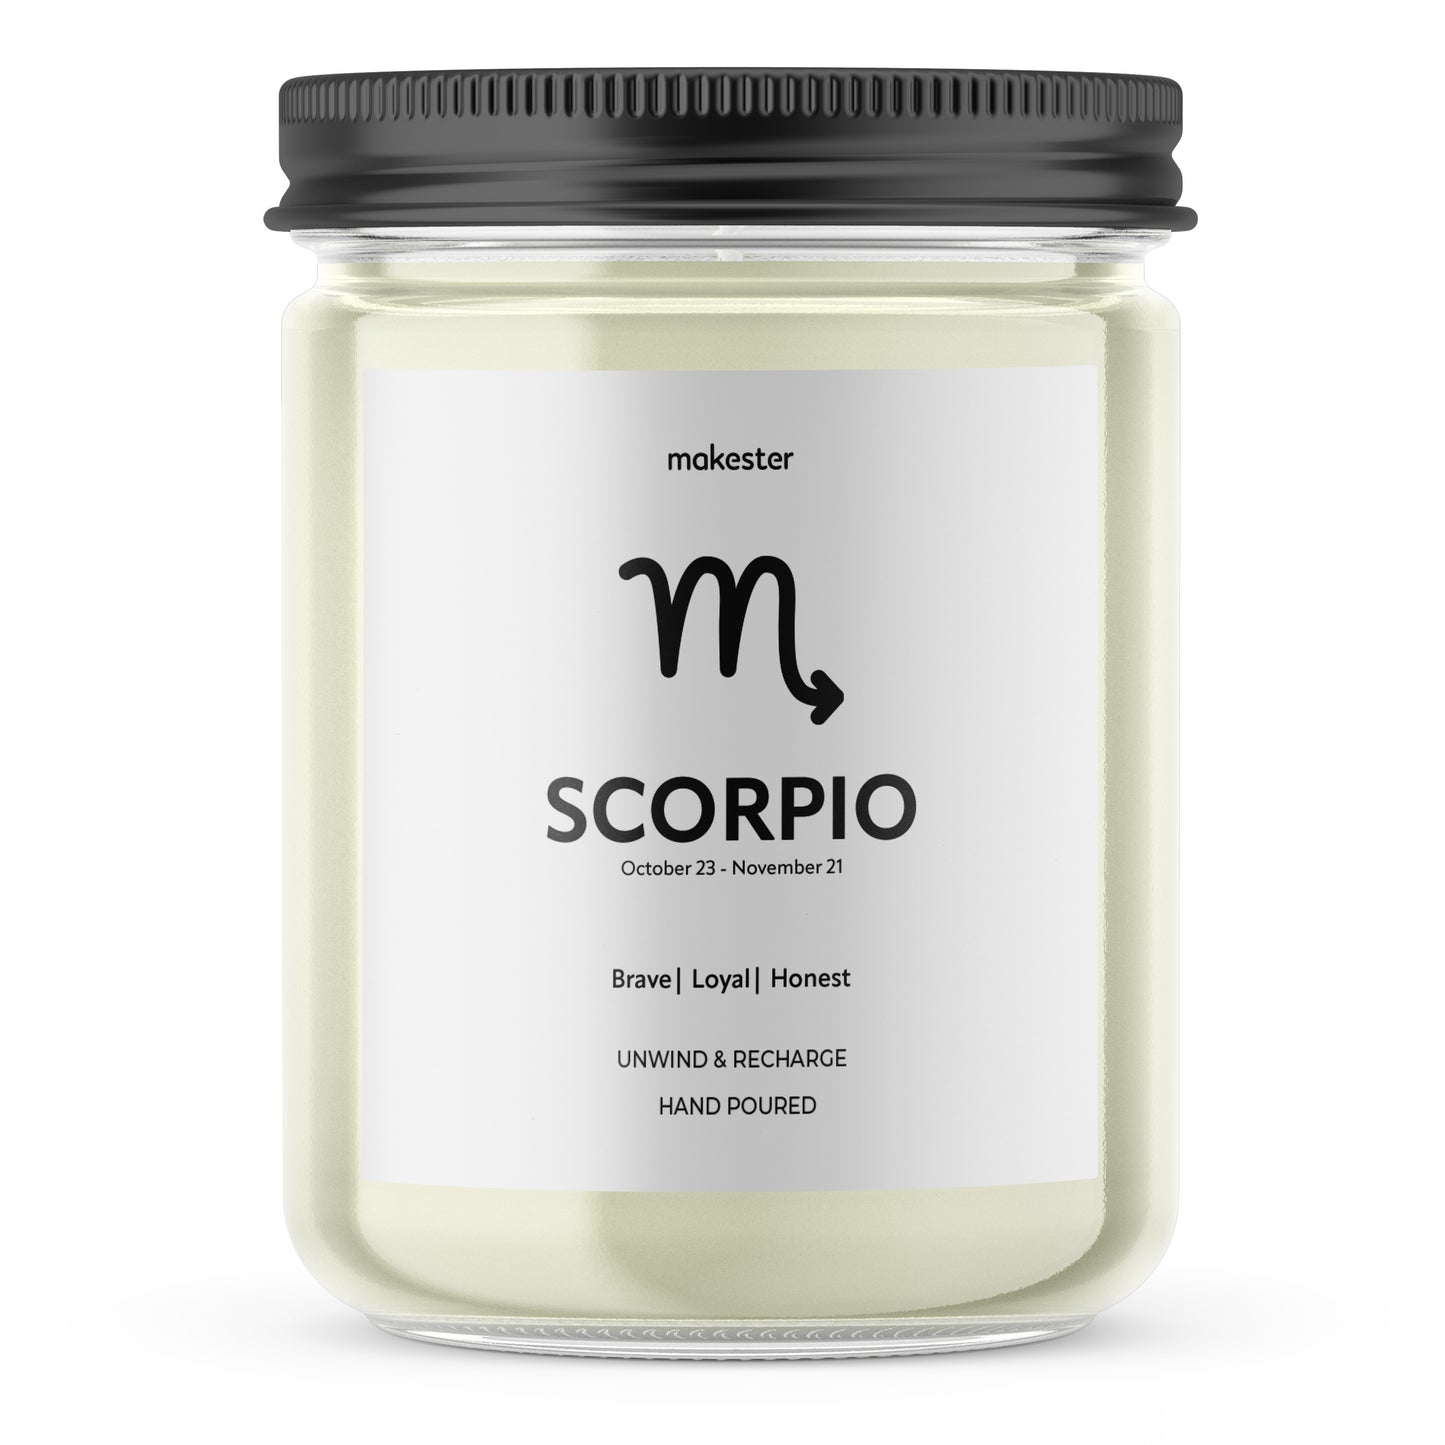 Scorpio Candle